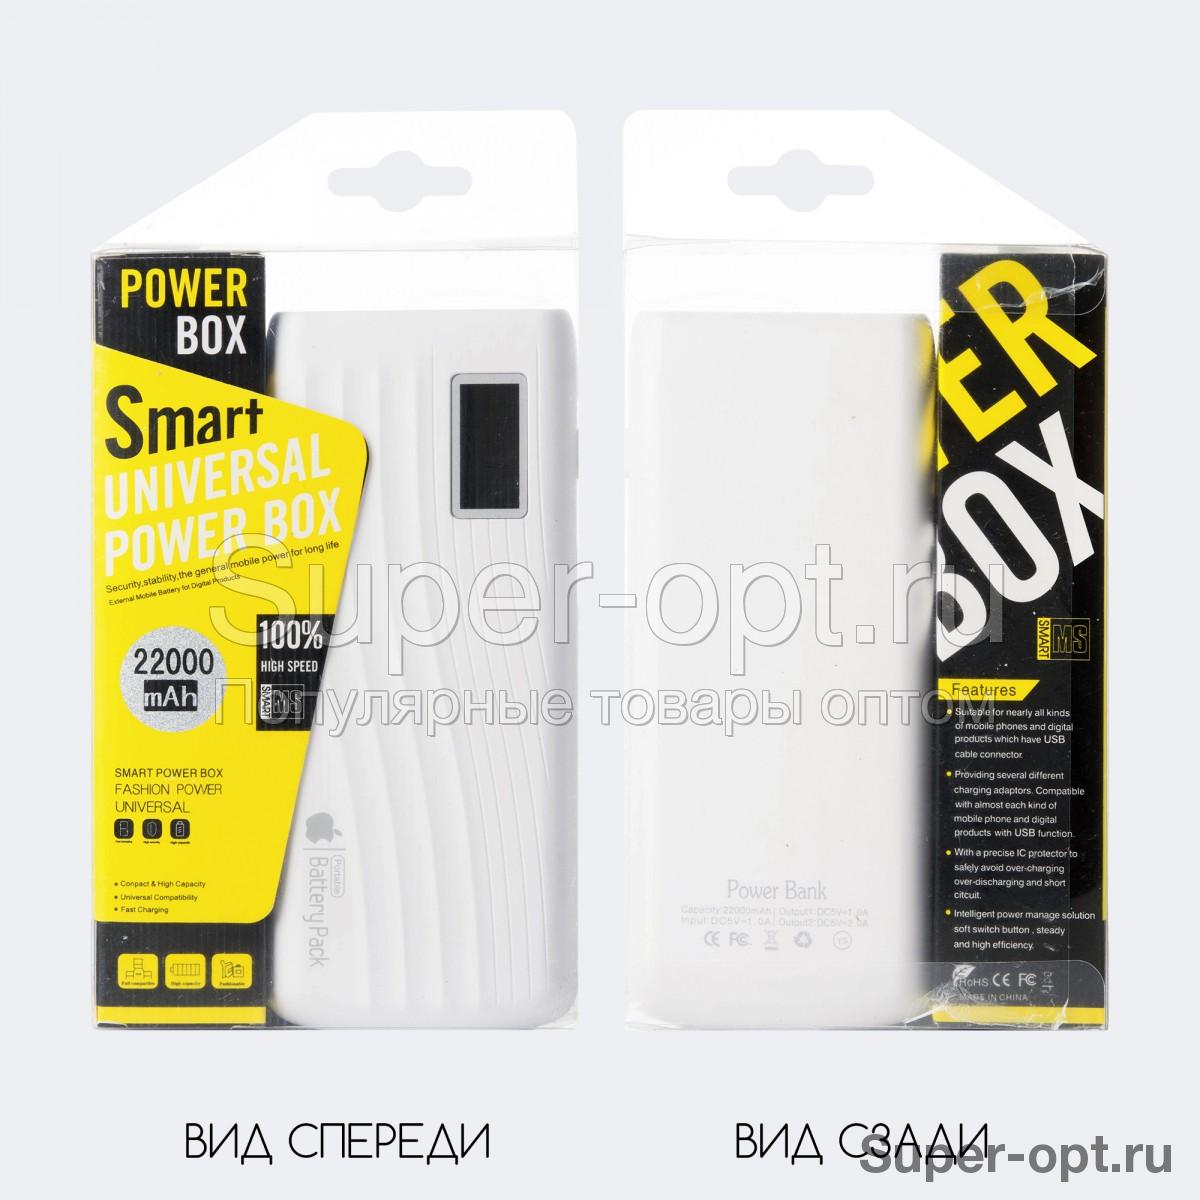 Power Bank Smart Power Box 22000 mAh